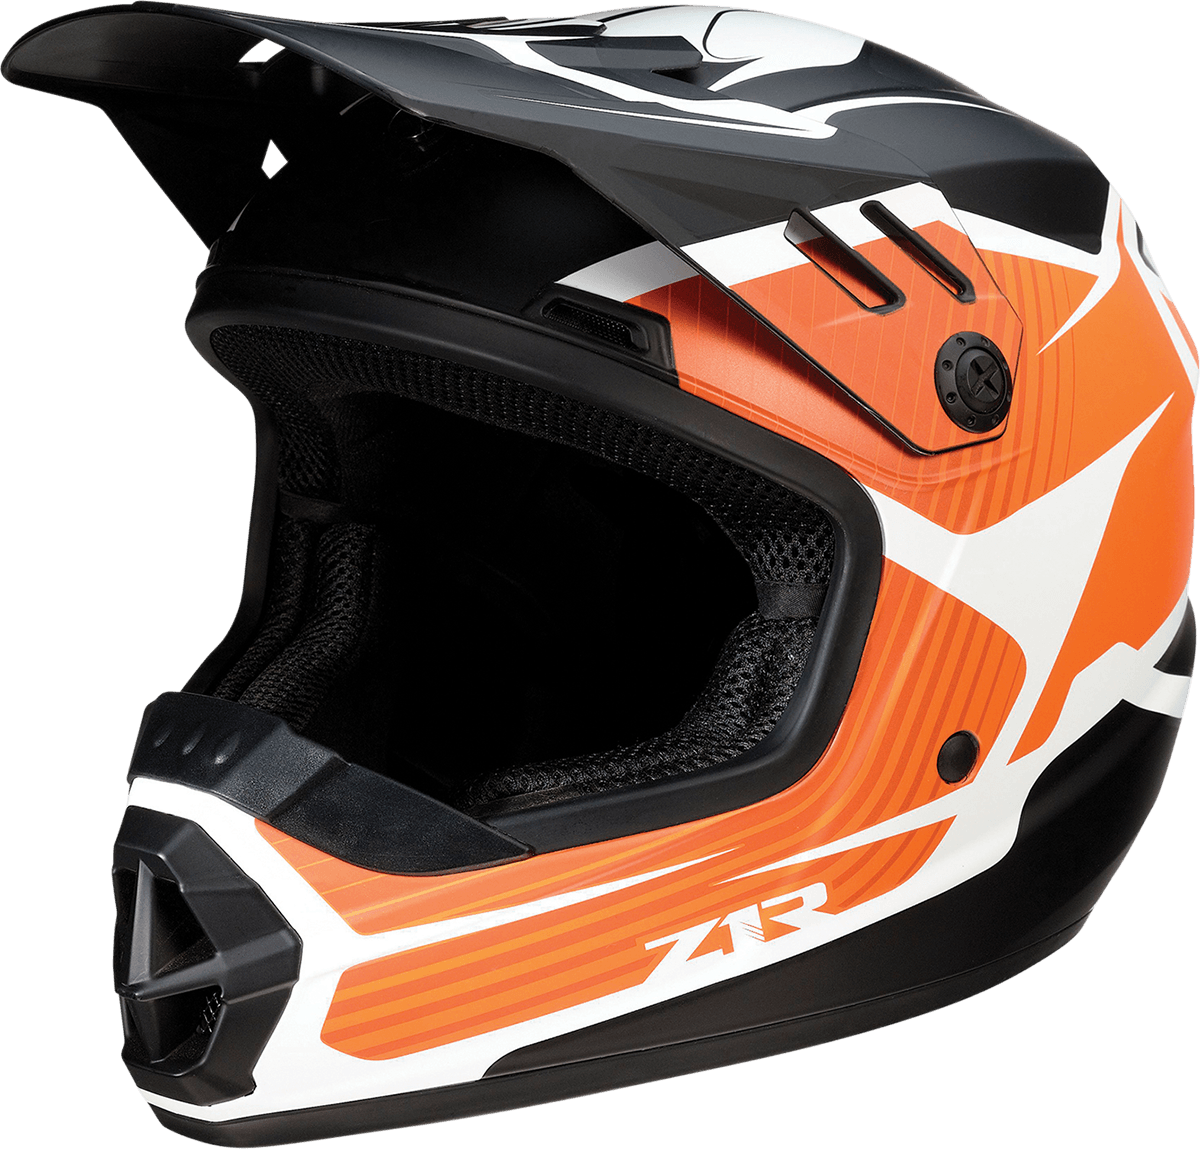 Z1R Youth Rise Helmet - Flame - Orange - Medium 0111-1443